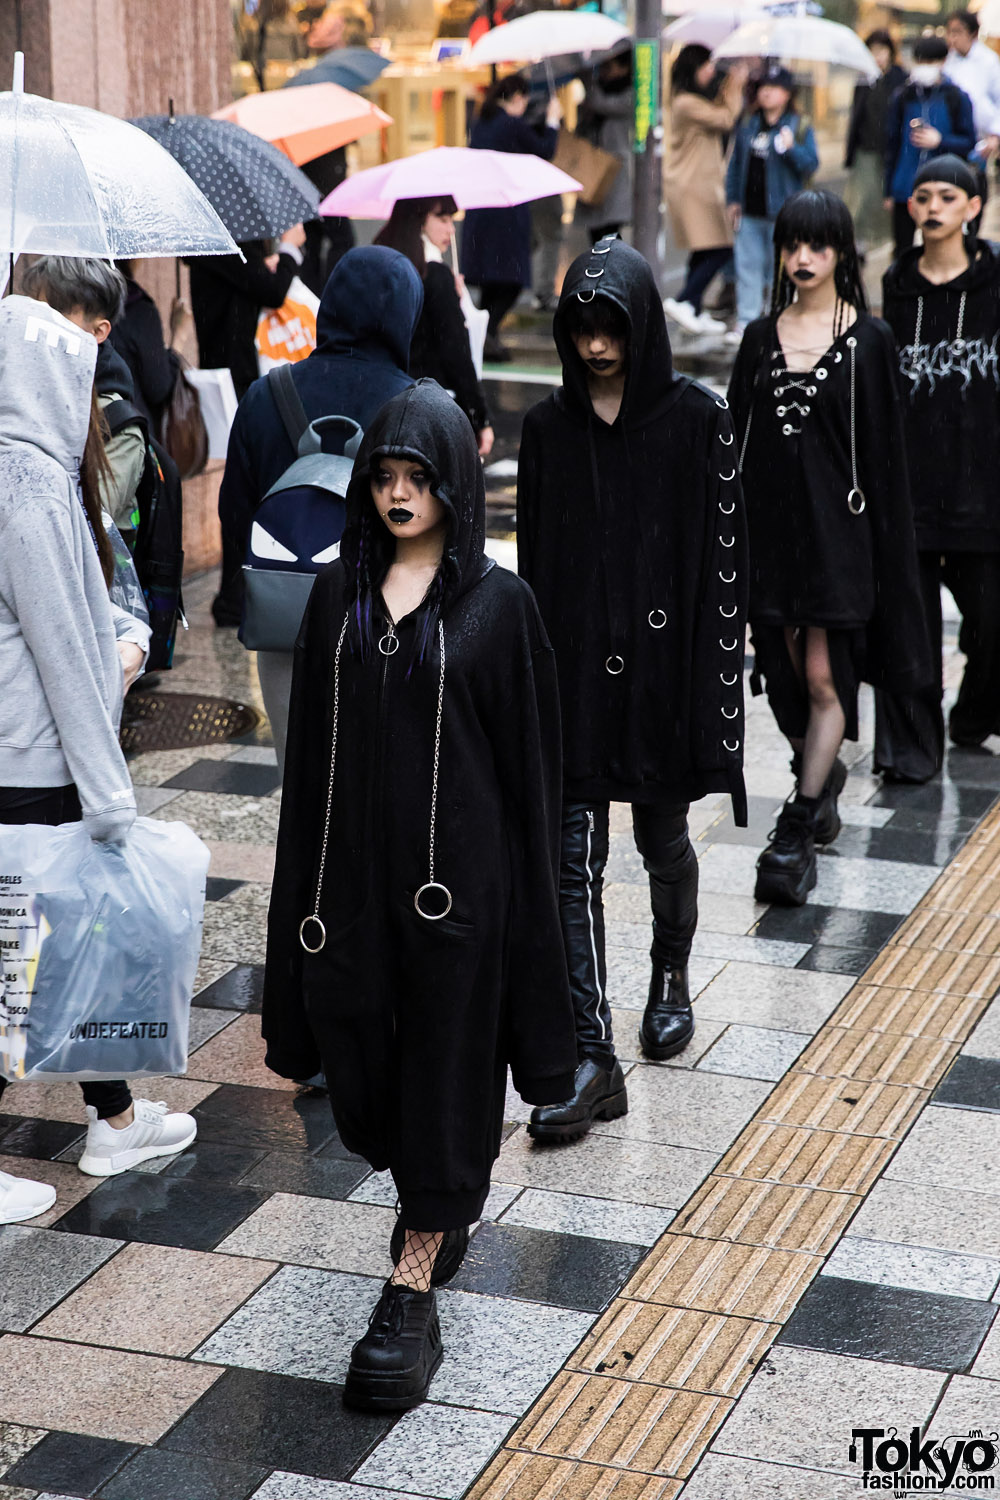 BERCERK "Dirty City" Japanese Fashion Brand's Dark